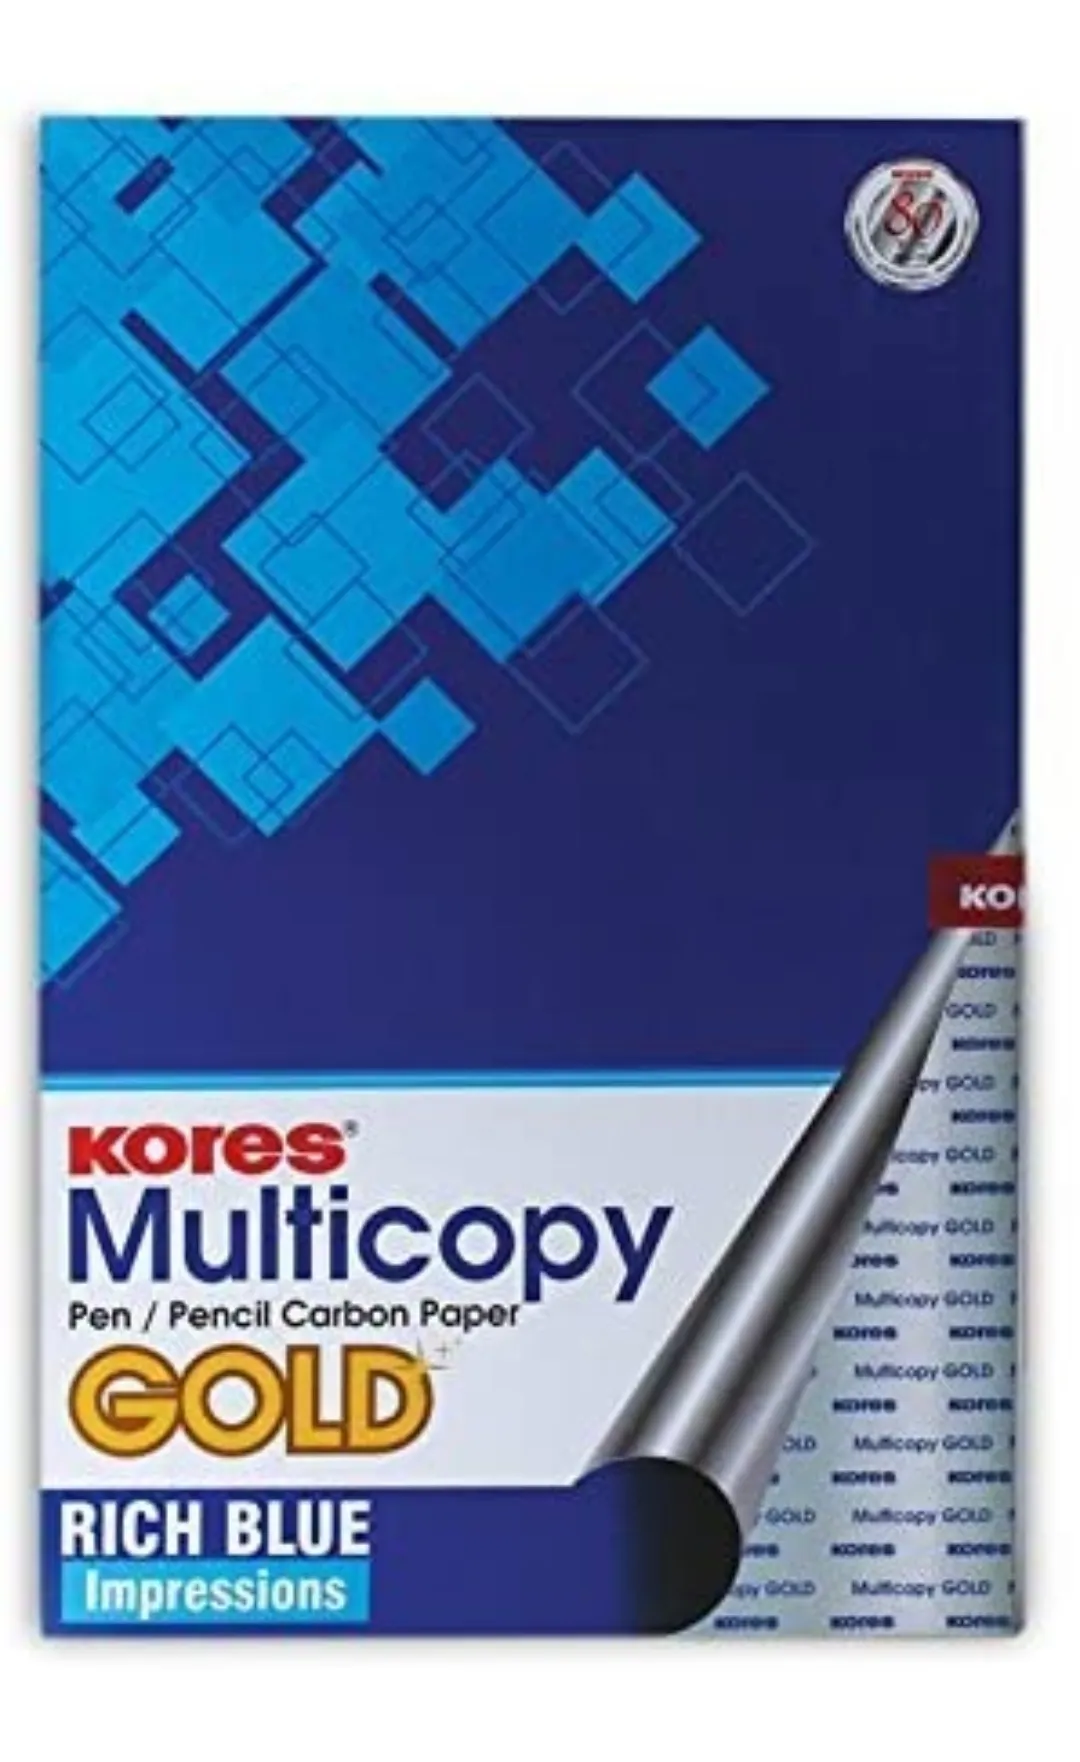 Kores Multicopy Pen/ Pencil Carbon Paper, Gold Rich Blue Impression,1 Pack of 100 Sheets